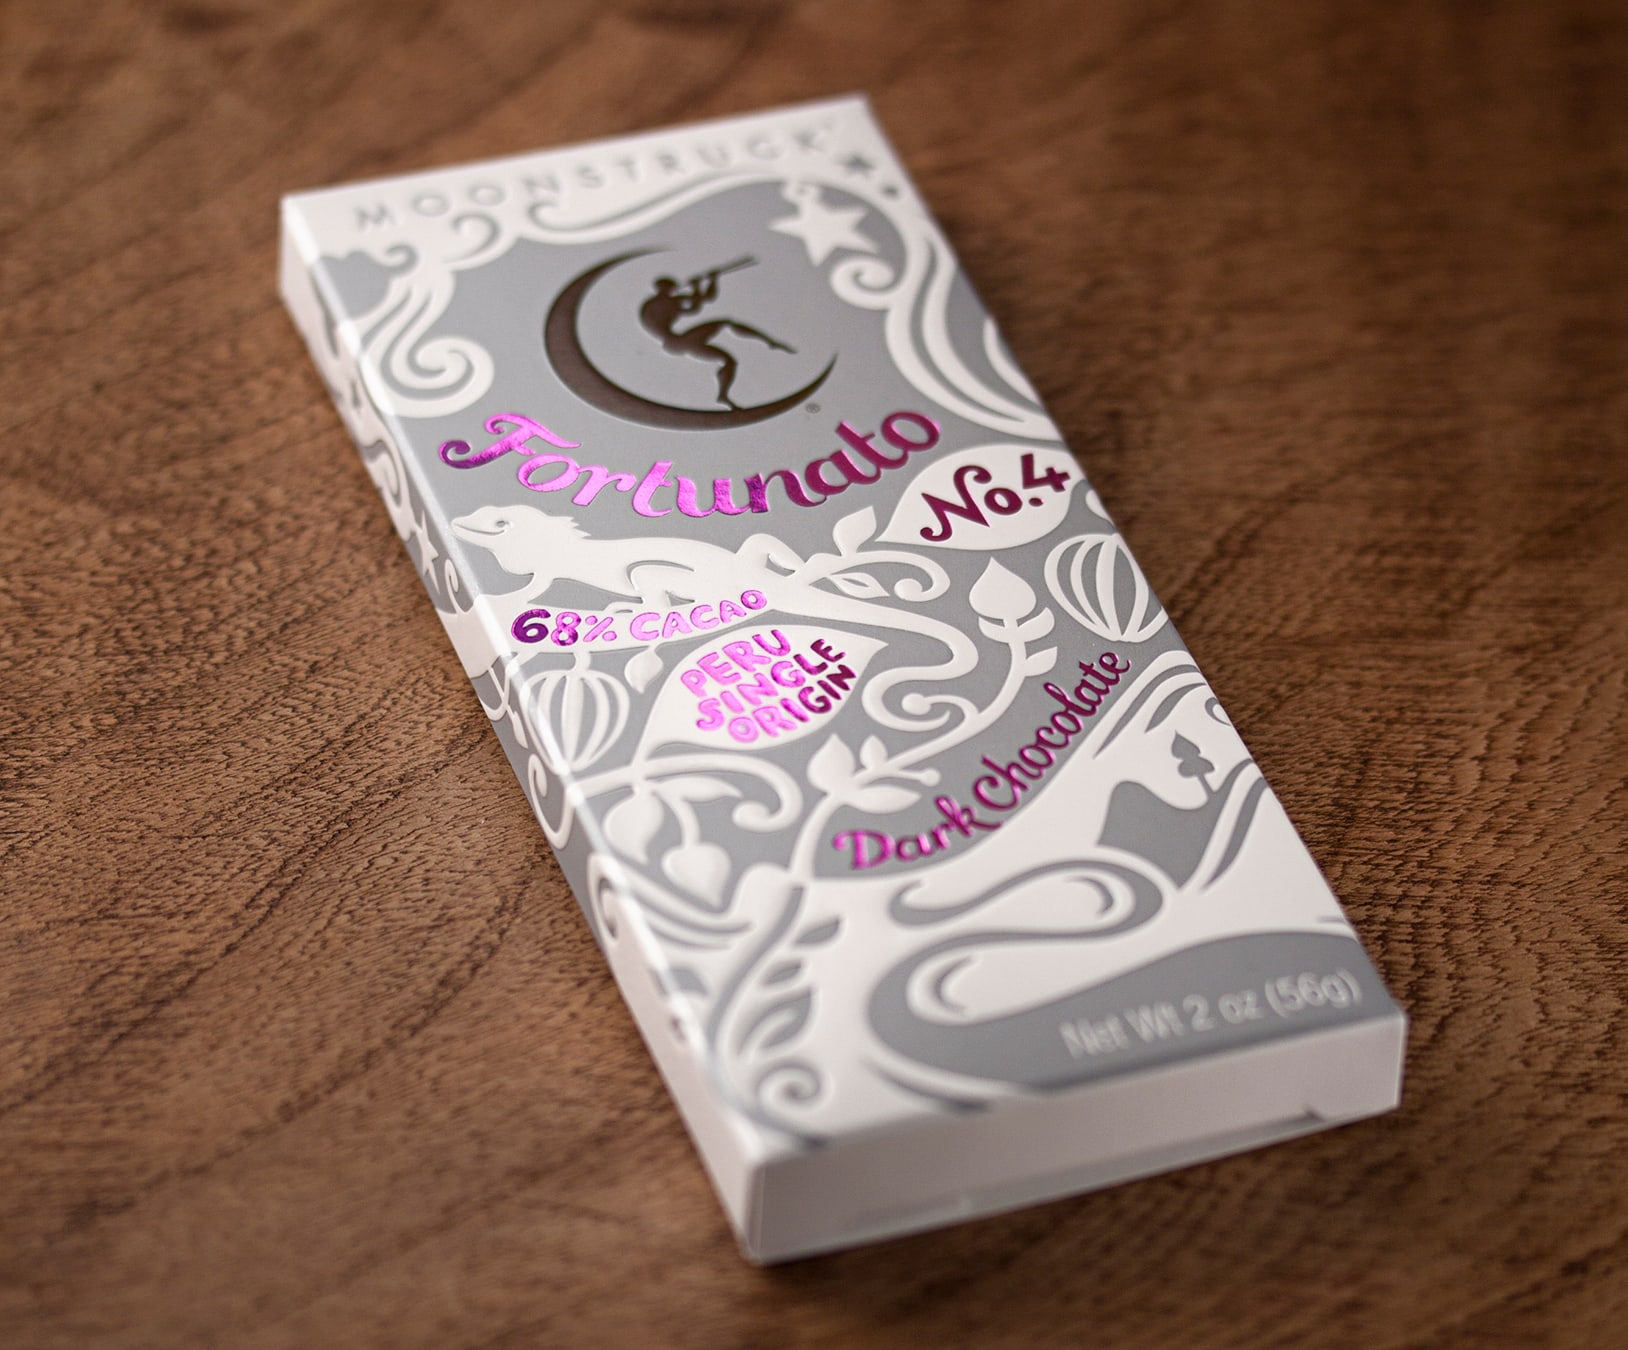 Moonstruck Chocolate Fortunato bar packaging design